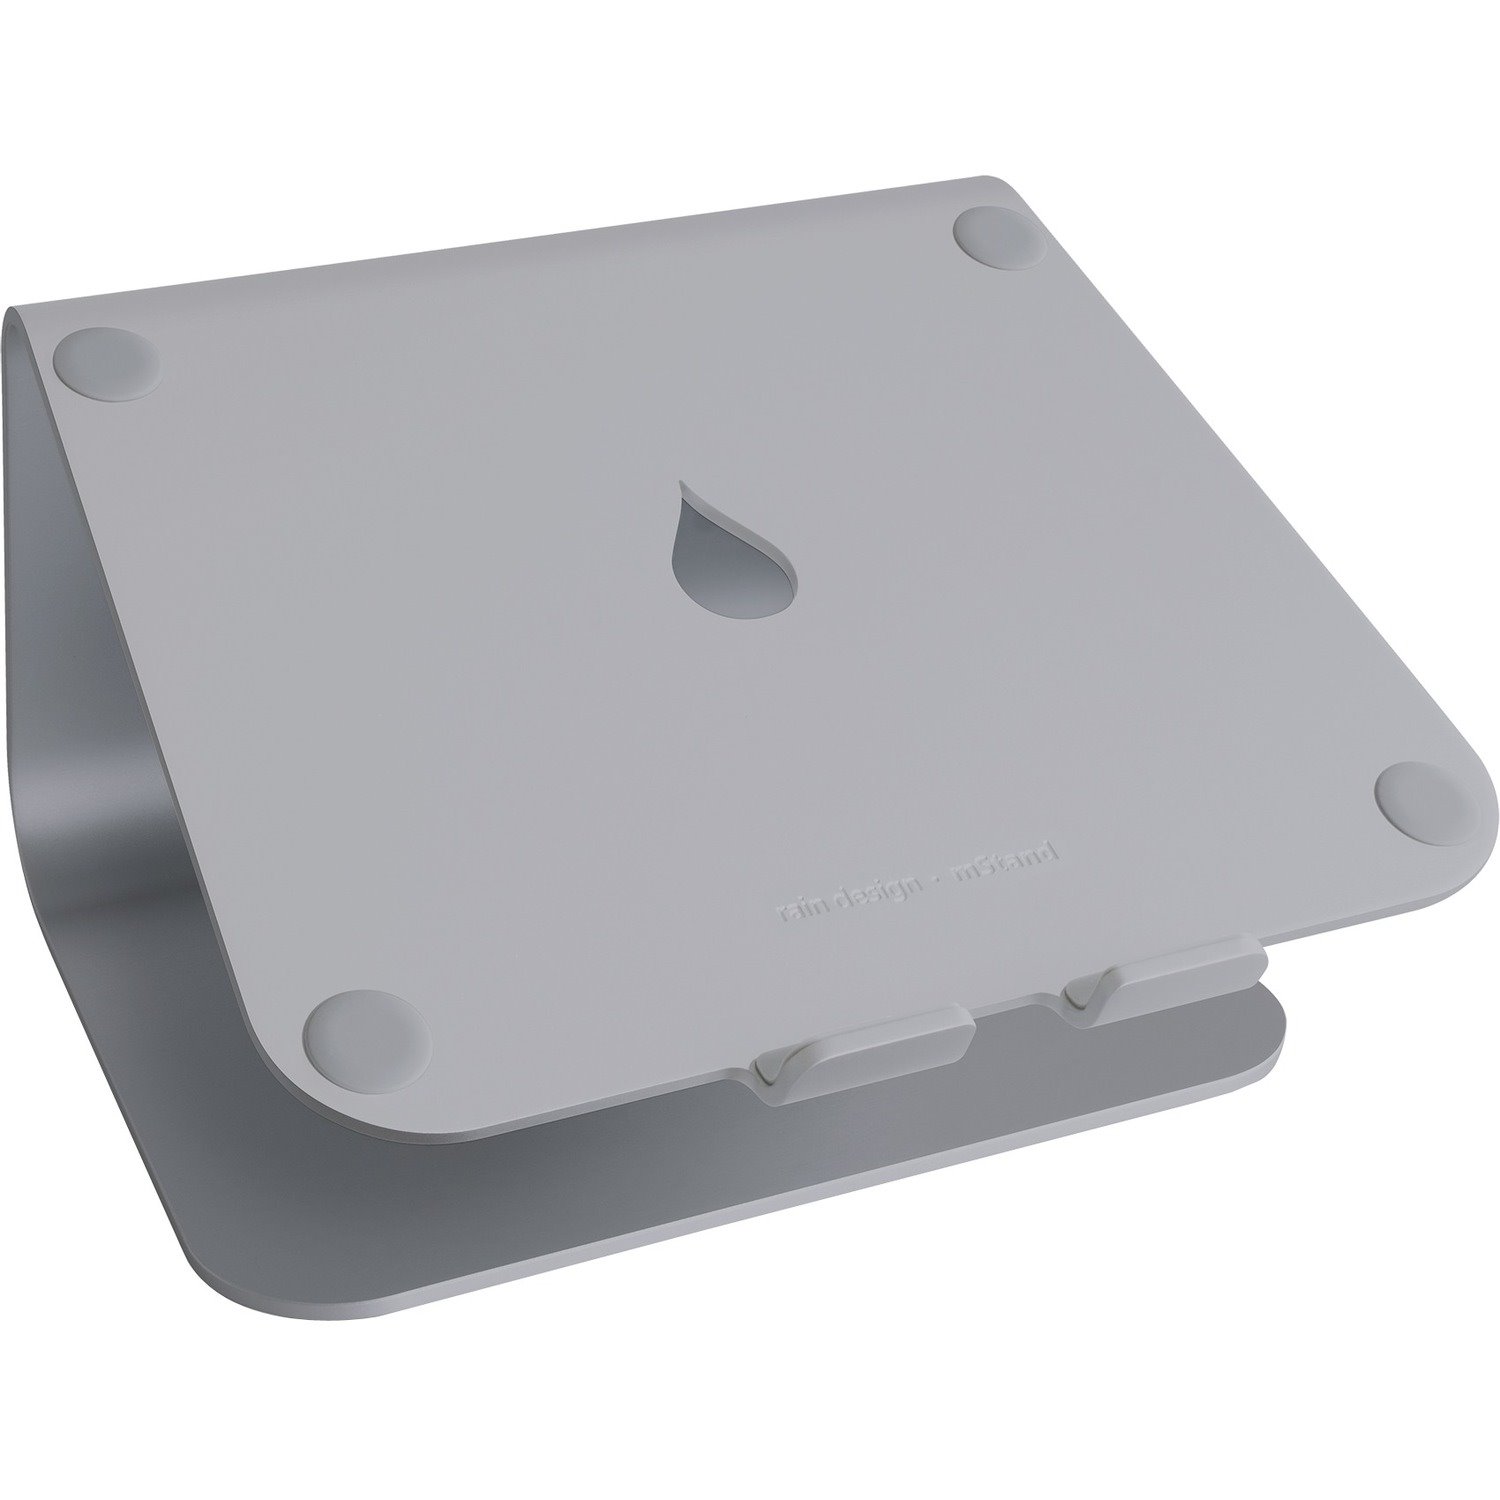 Rain Design mStand Aluminium Laptop Stand for Macbooks - Space Grey